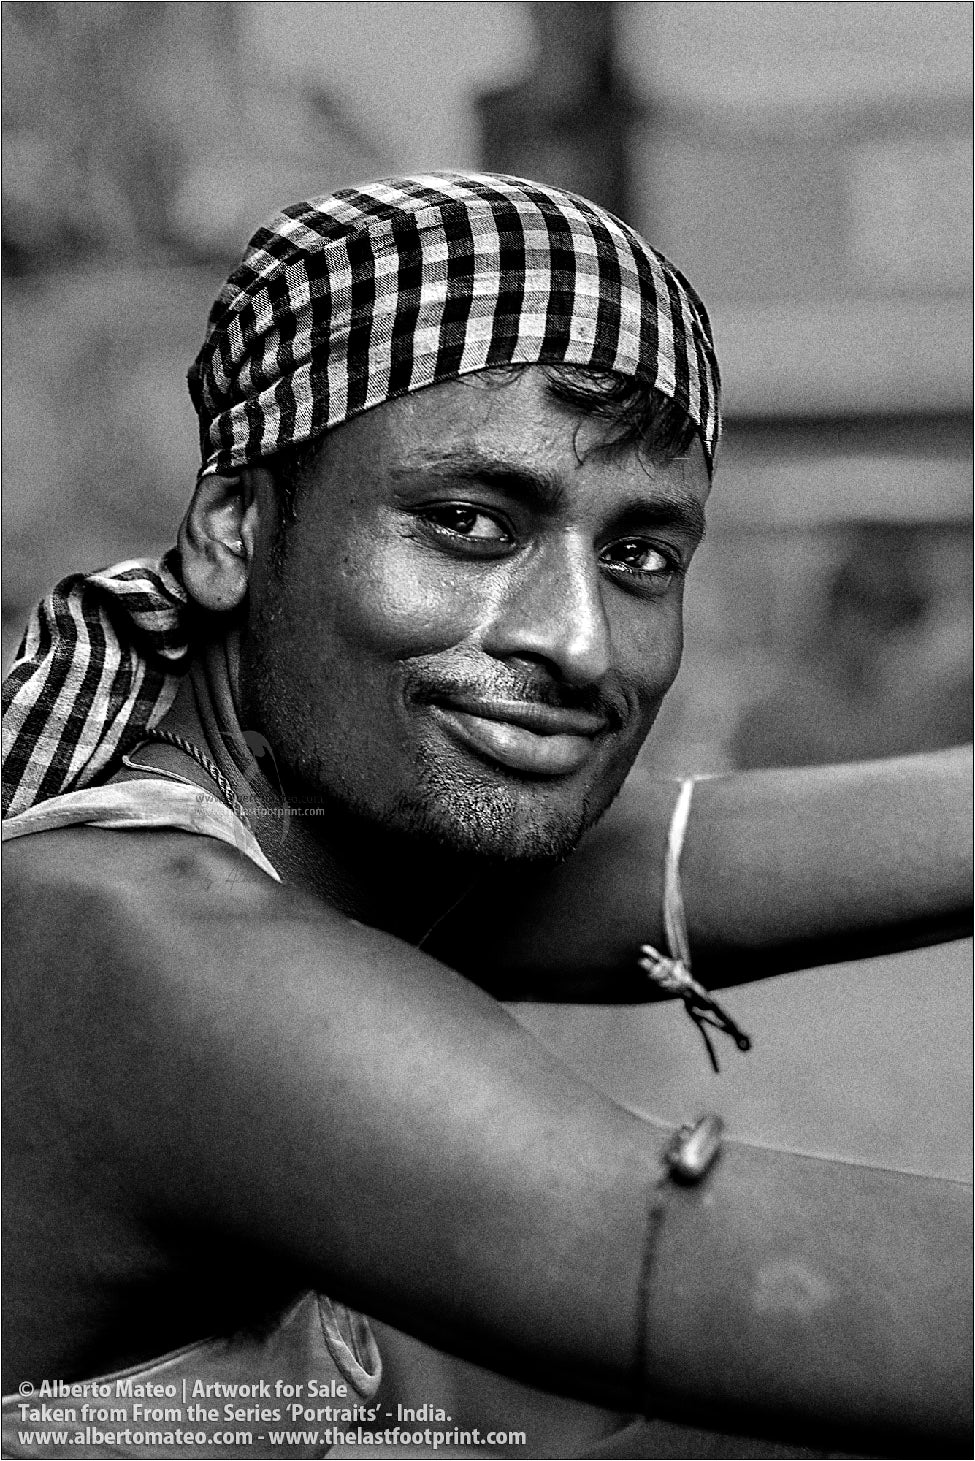 Portrait of Smiling Young Porter, Bara Bazar, Kolkata, India.